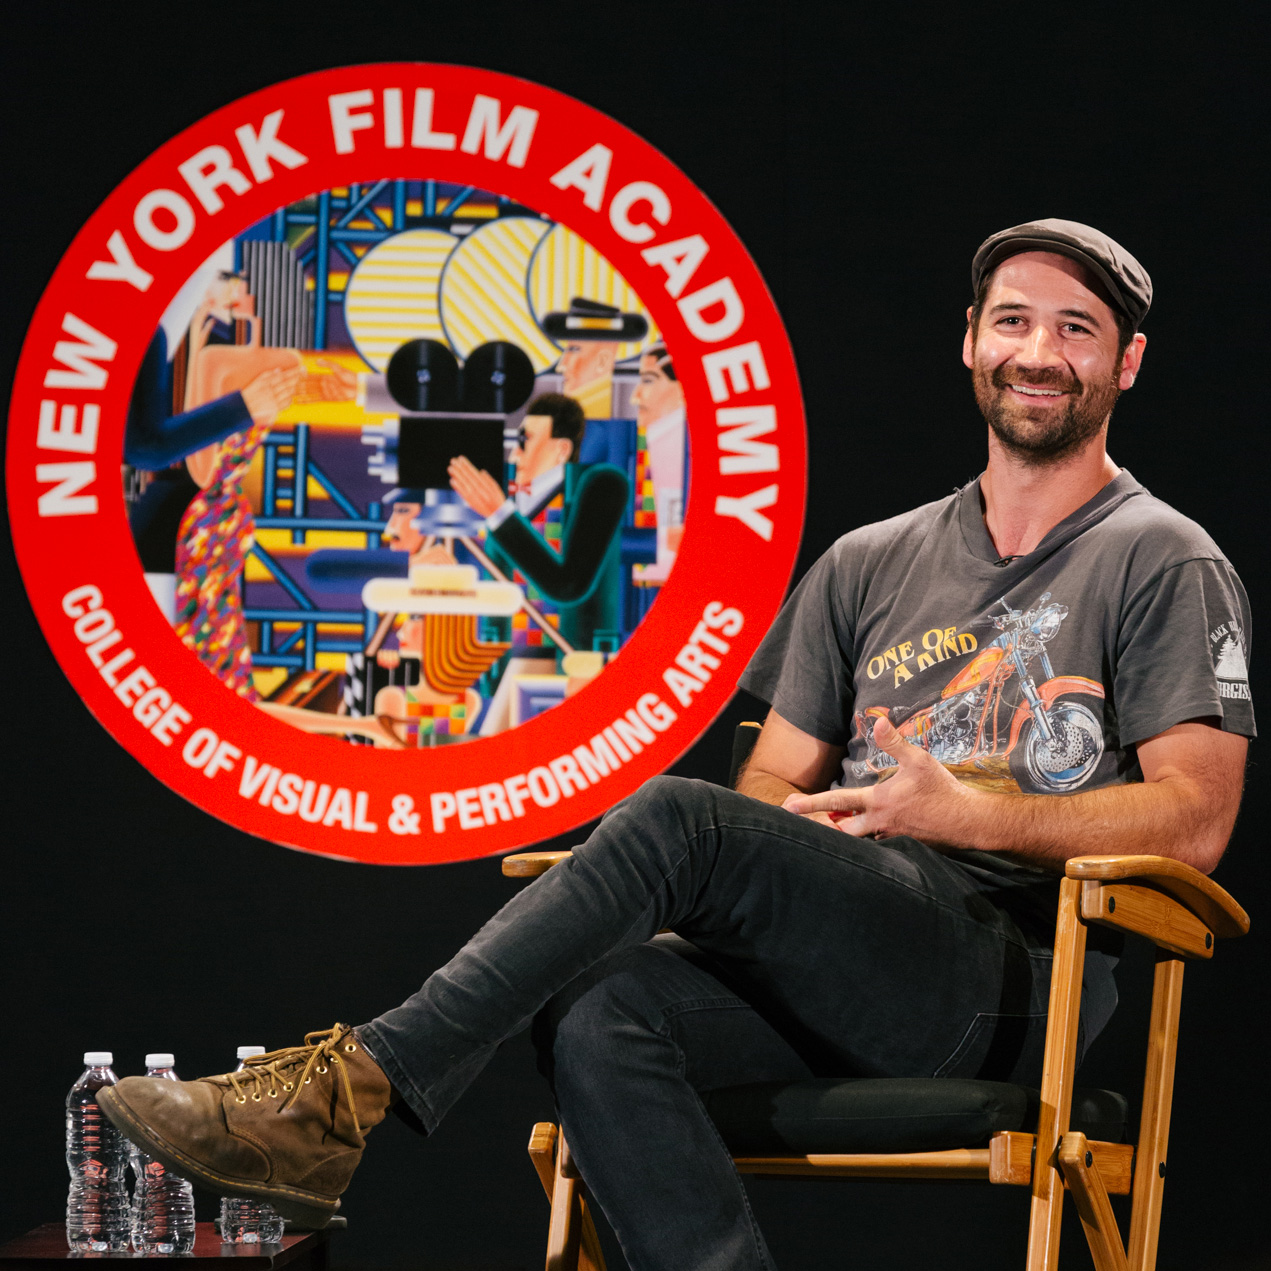 New York Film Academy Nyfa Acting For Film Alum Manuel Garcia Rulfo Stars In Michael Bay S 6 Underground On Netflix